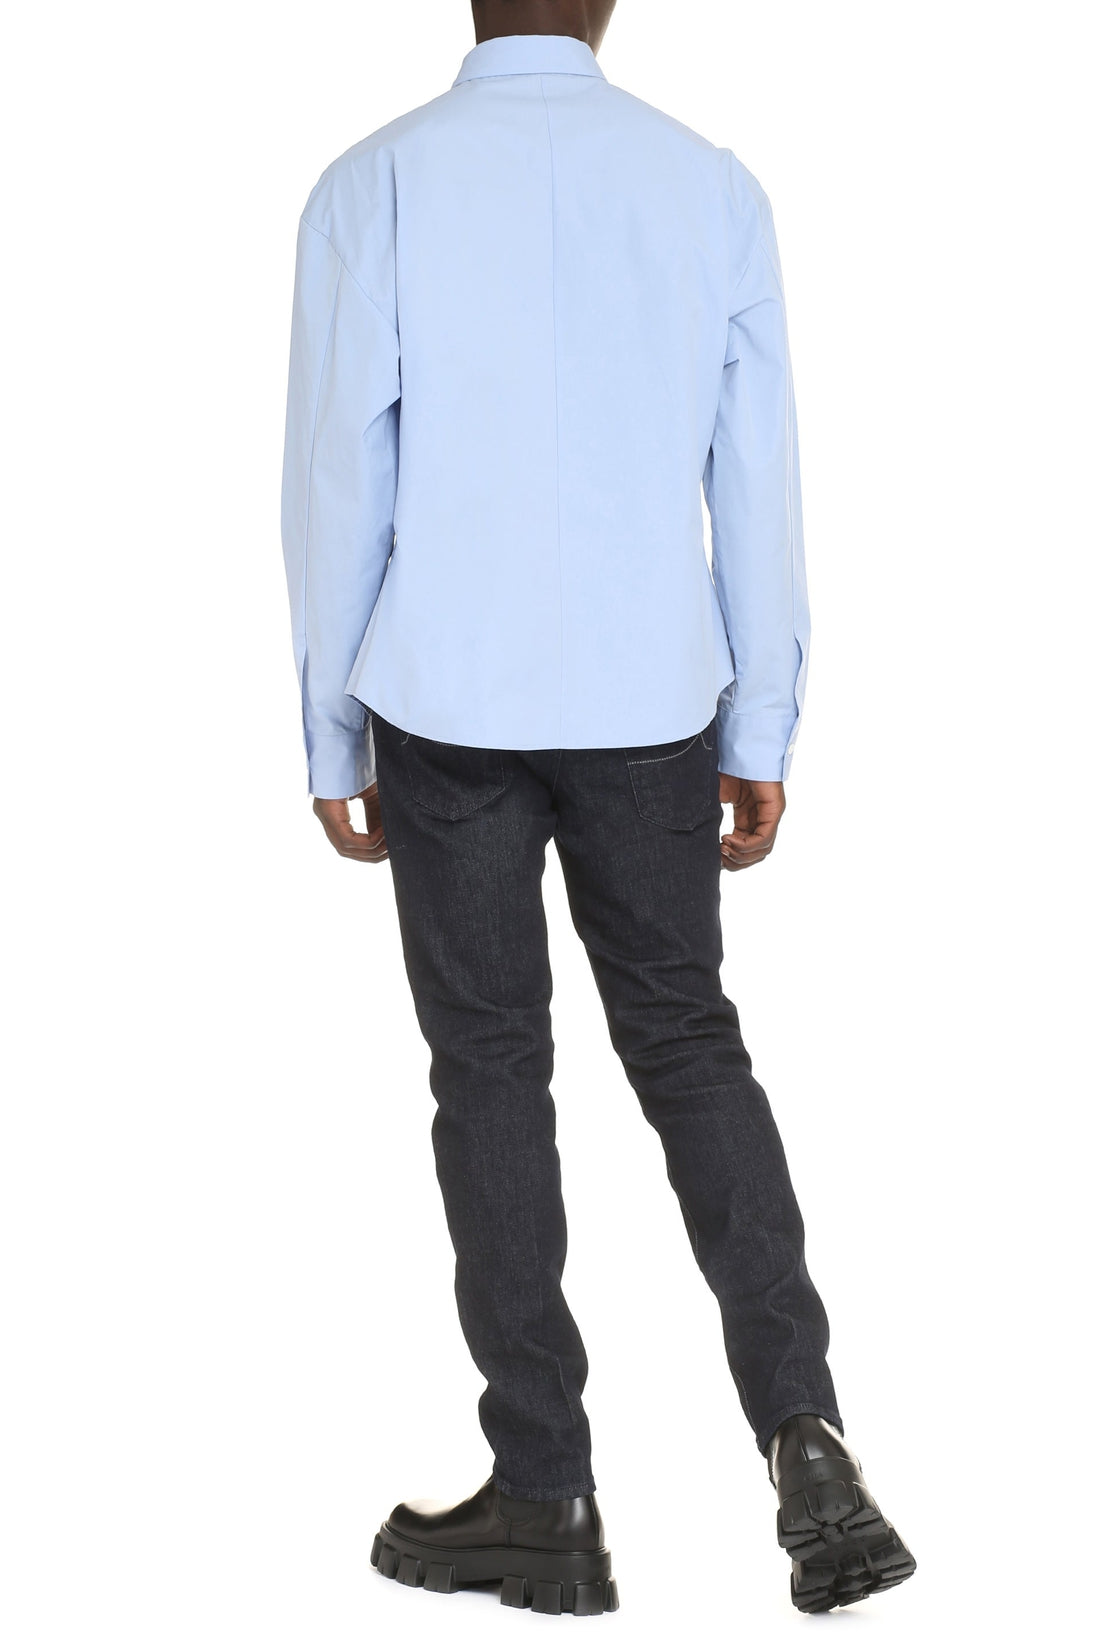 Valentino-OUTLET-SALE-Cotton poplin shirt-ARCHIVIST